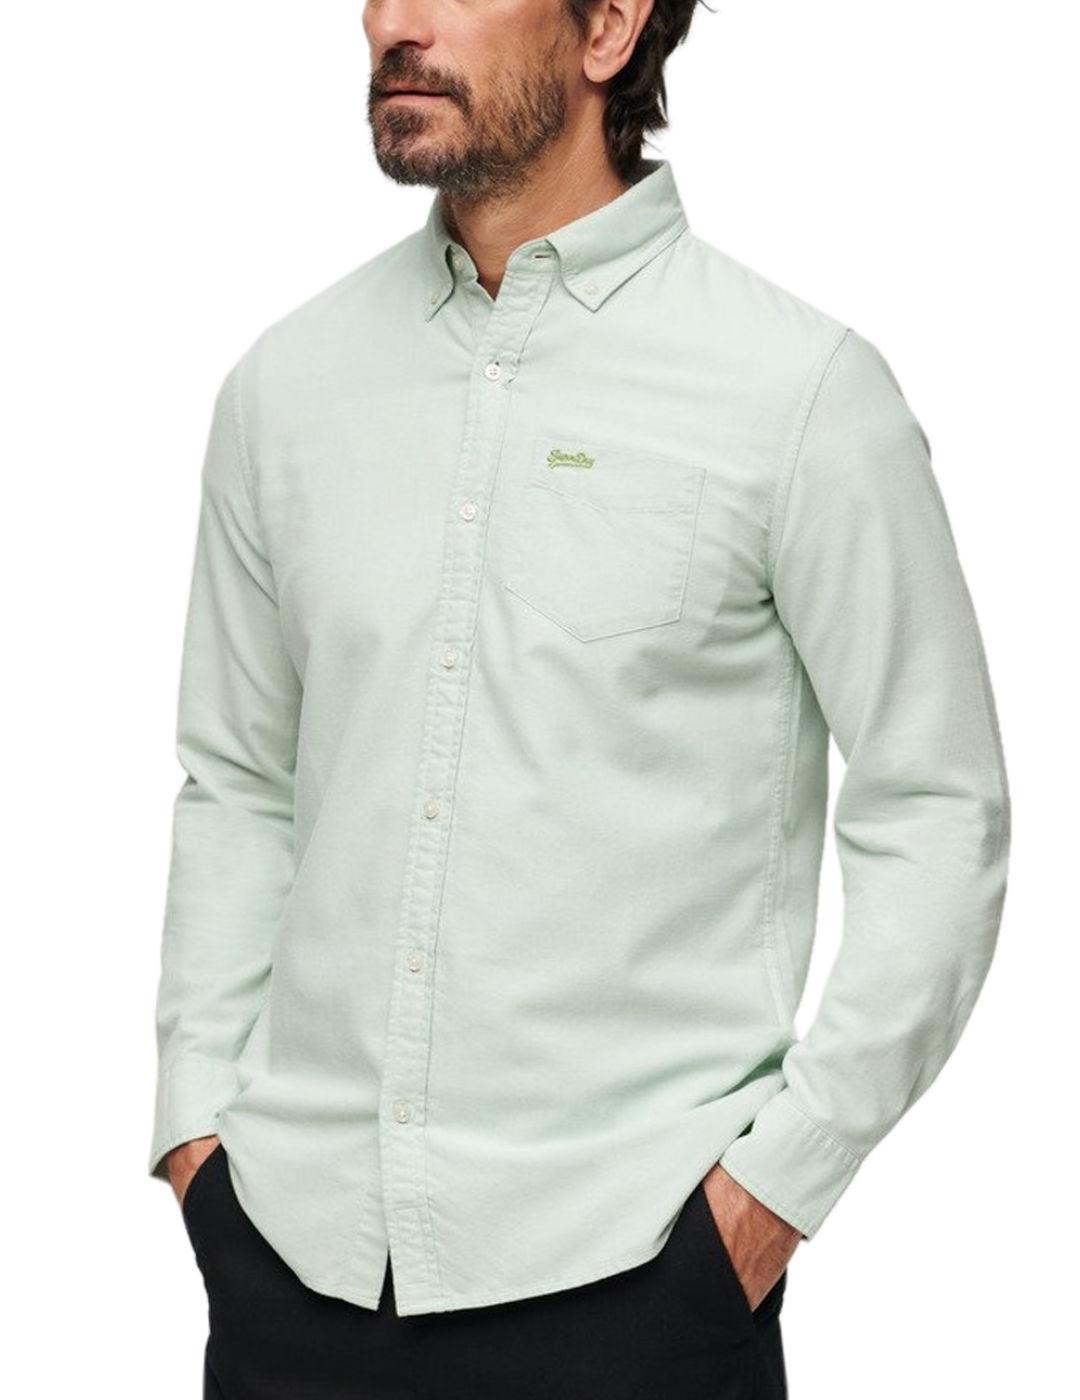 Camisa Superdry Oxford verde claro manga larga para hombre